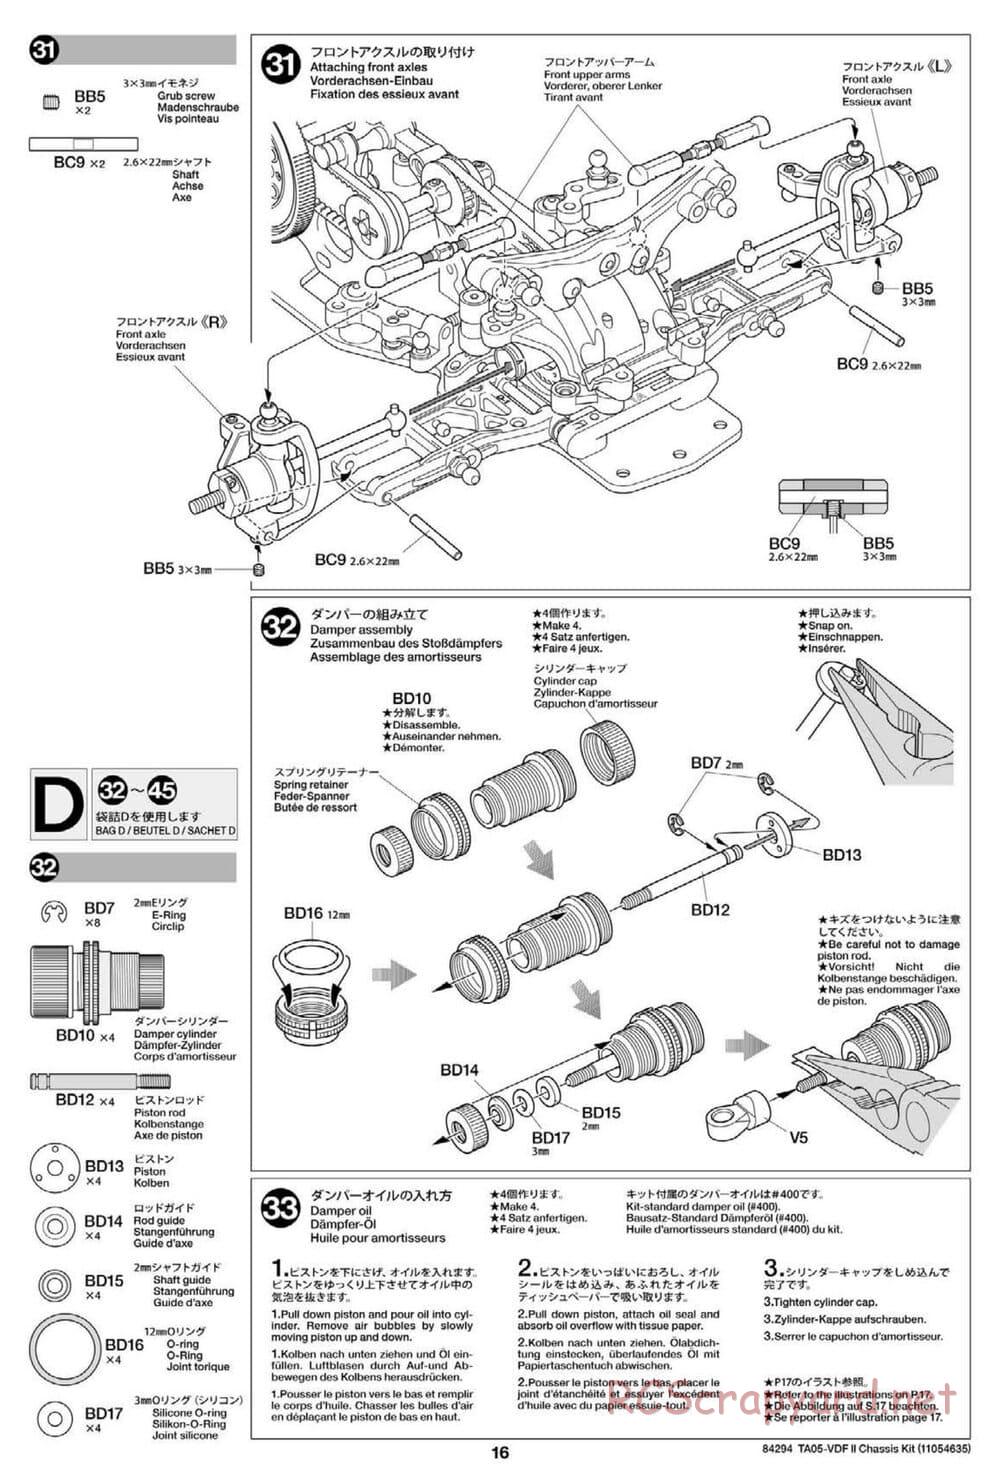 Tamiya - TA05-VDF II Drift Chassis - Manual - Page 16